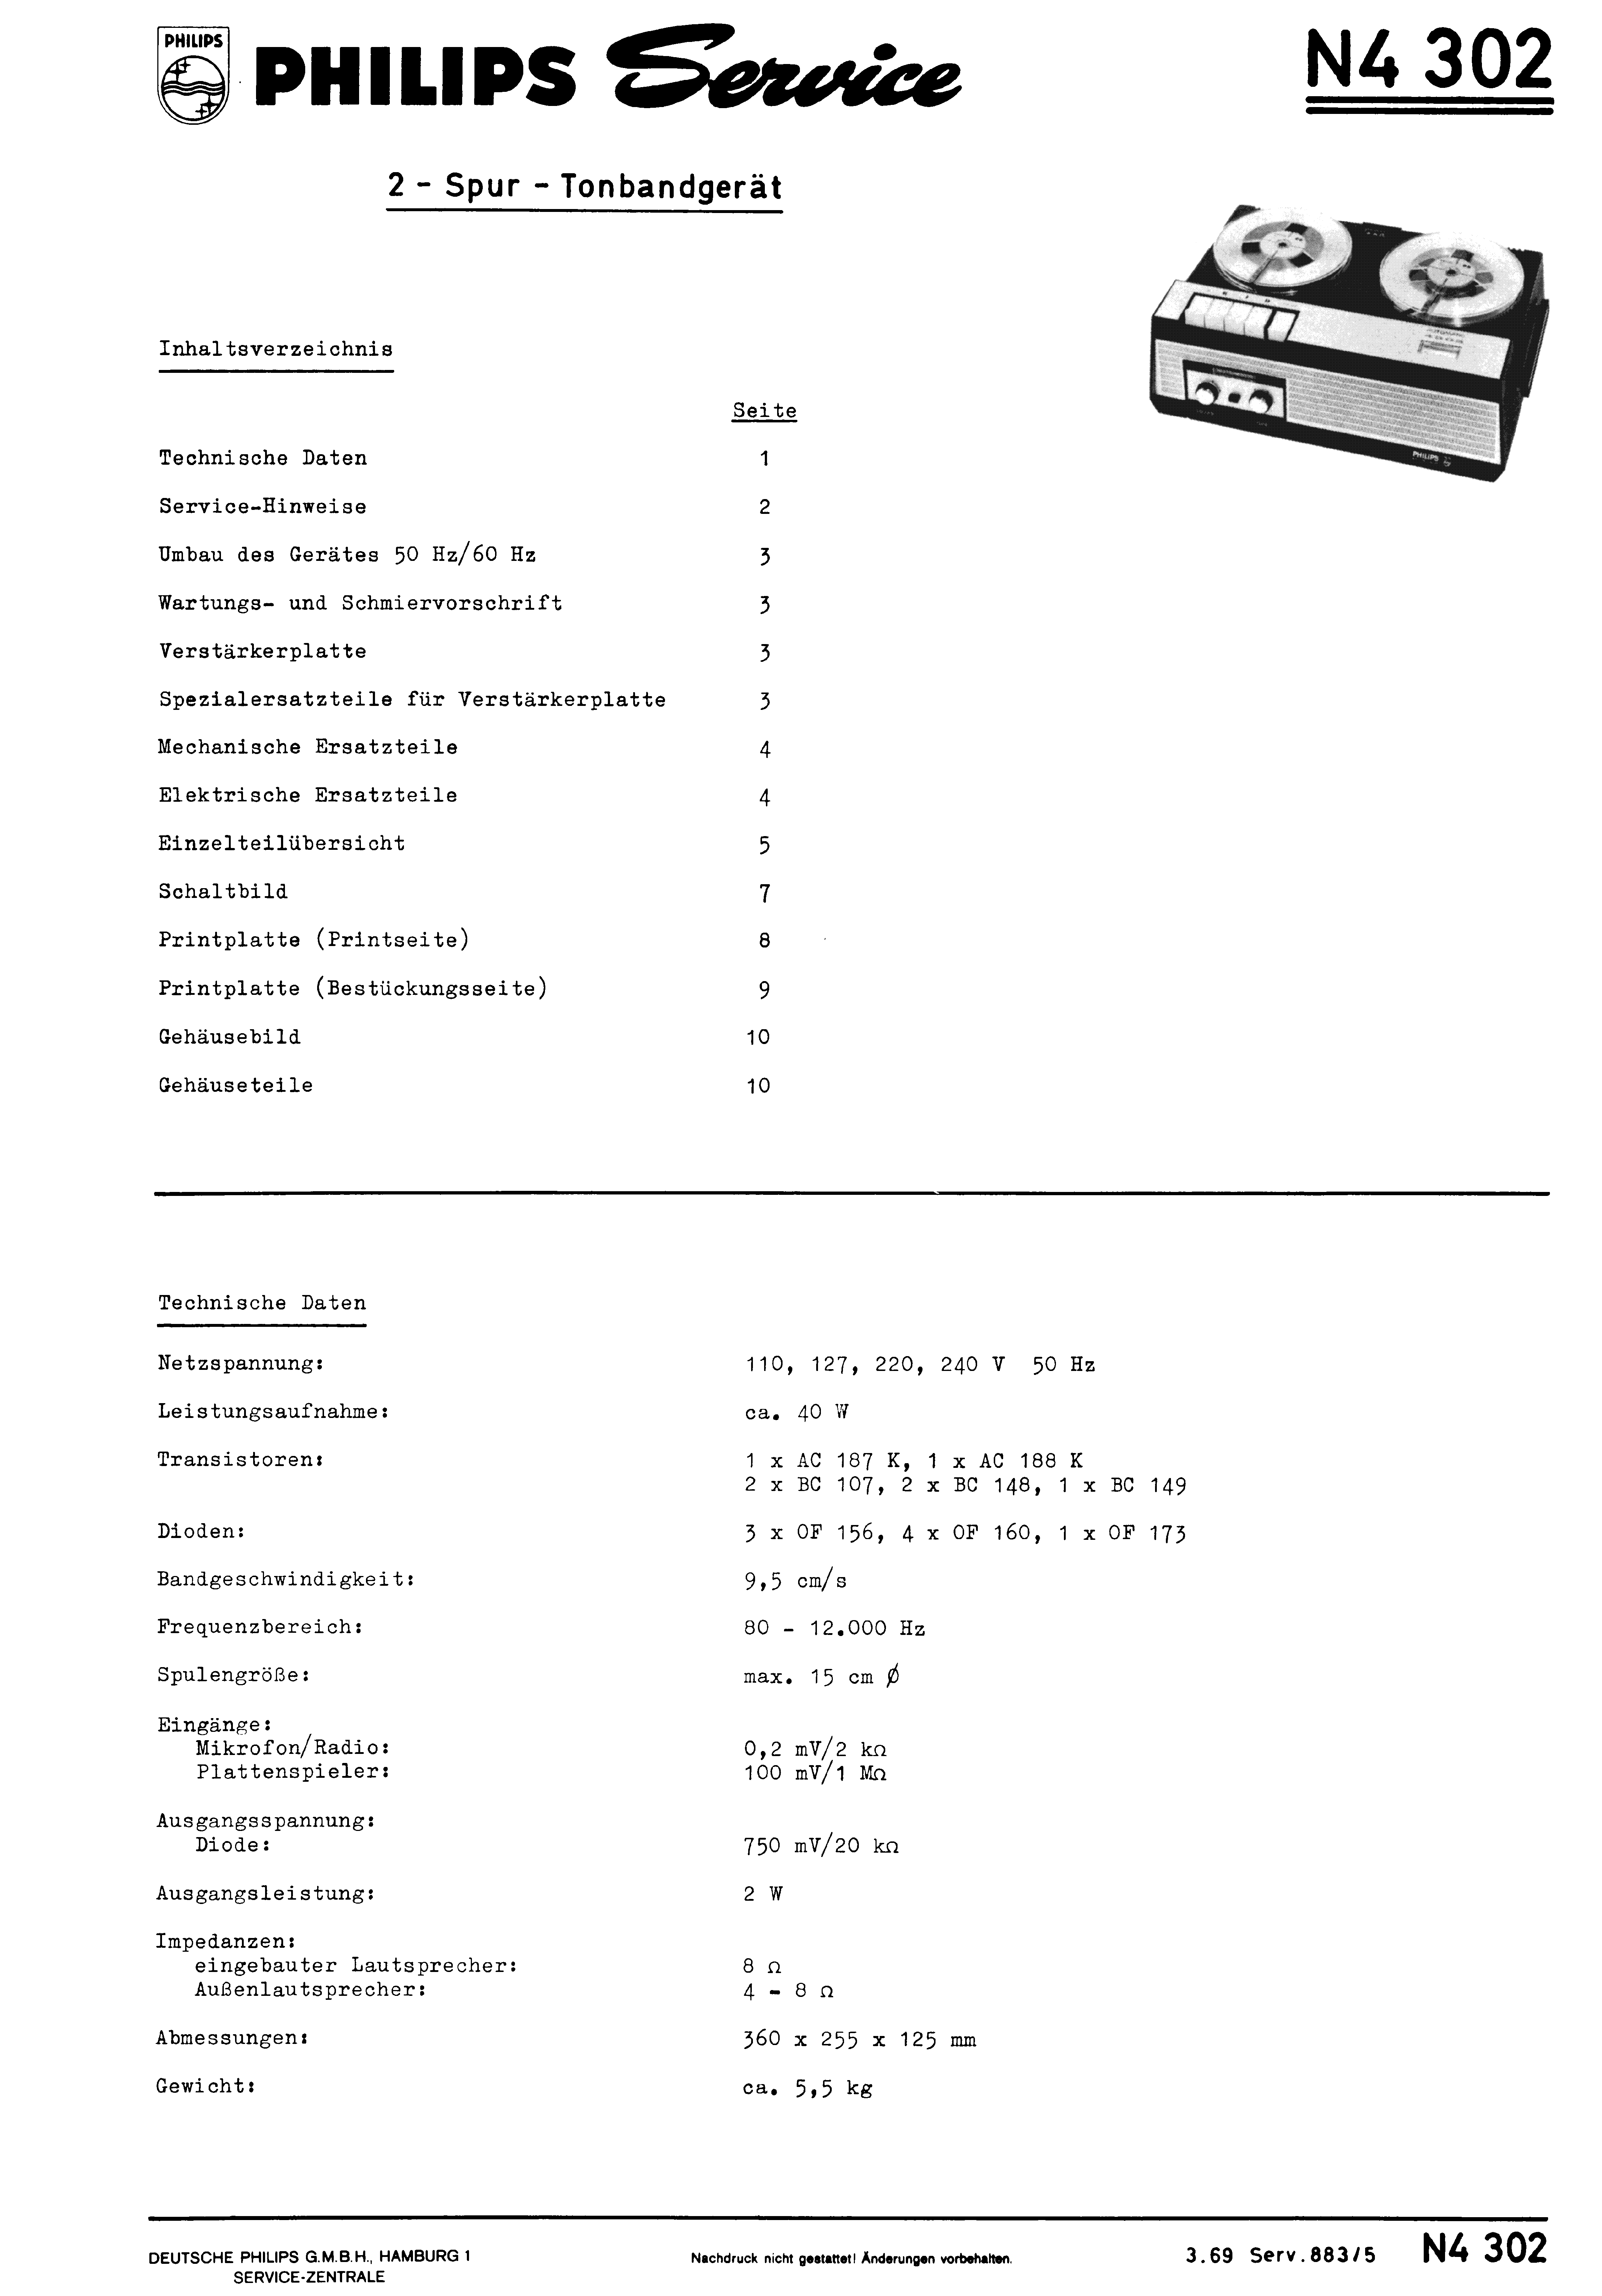 PHILIPS 2 - SPUR - TONBANDGERAET N4302 SM service manual (1st page)